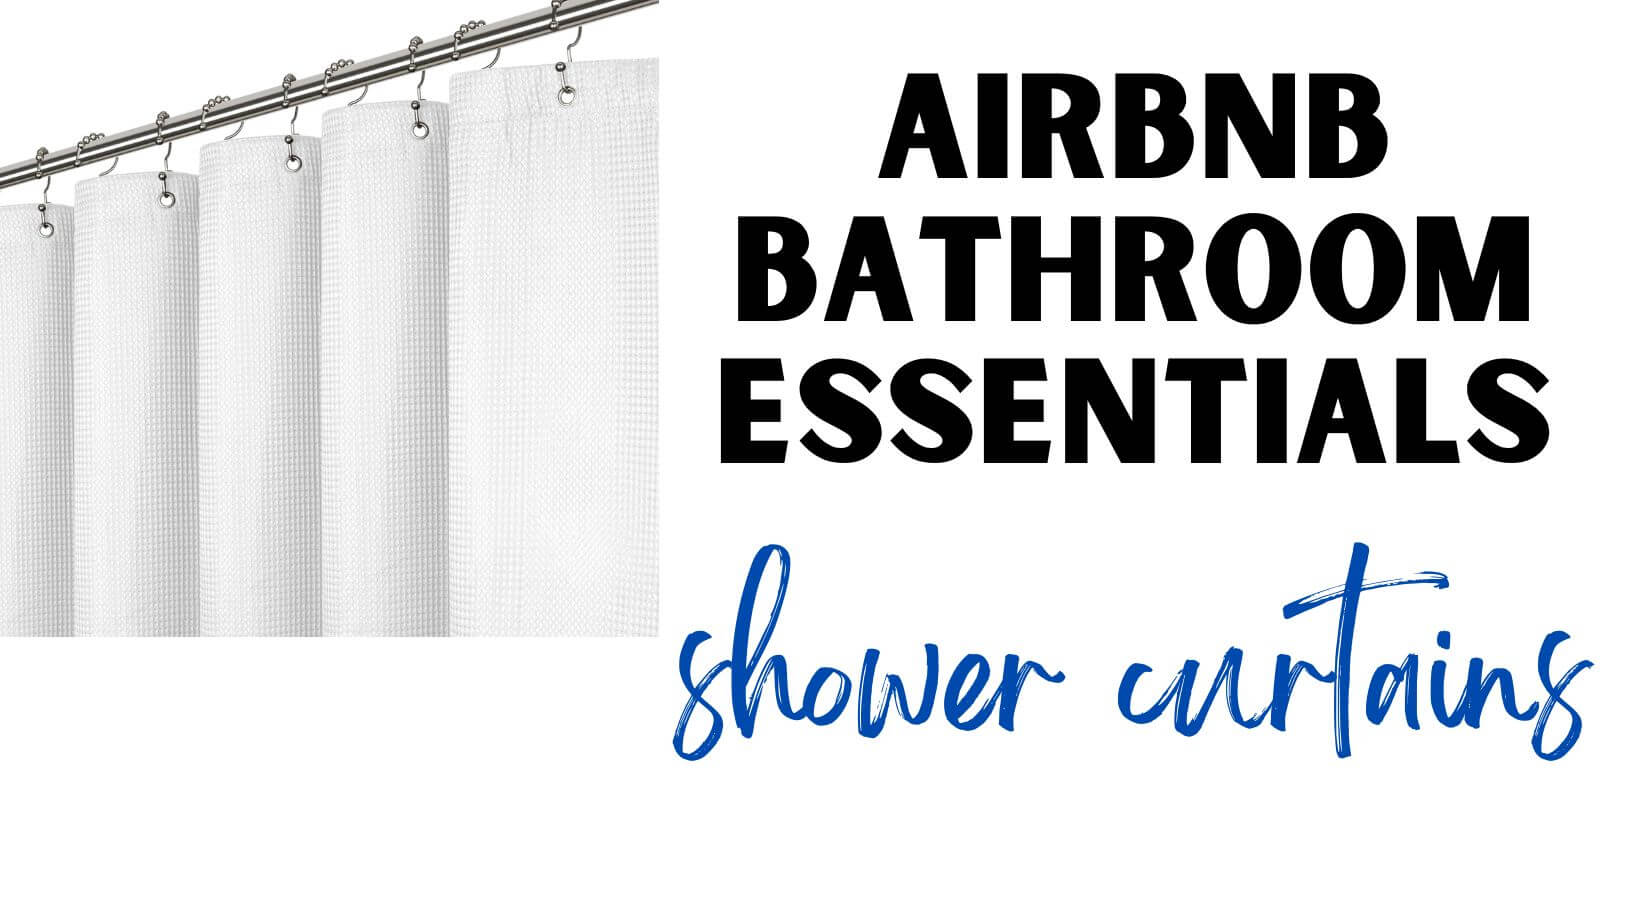 Airbnb Bathroom Essentials Shower Curtains